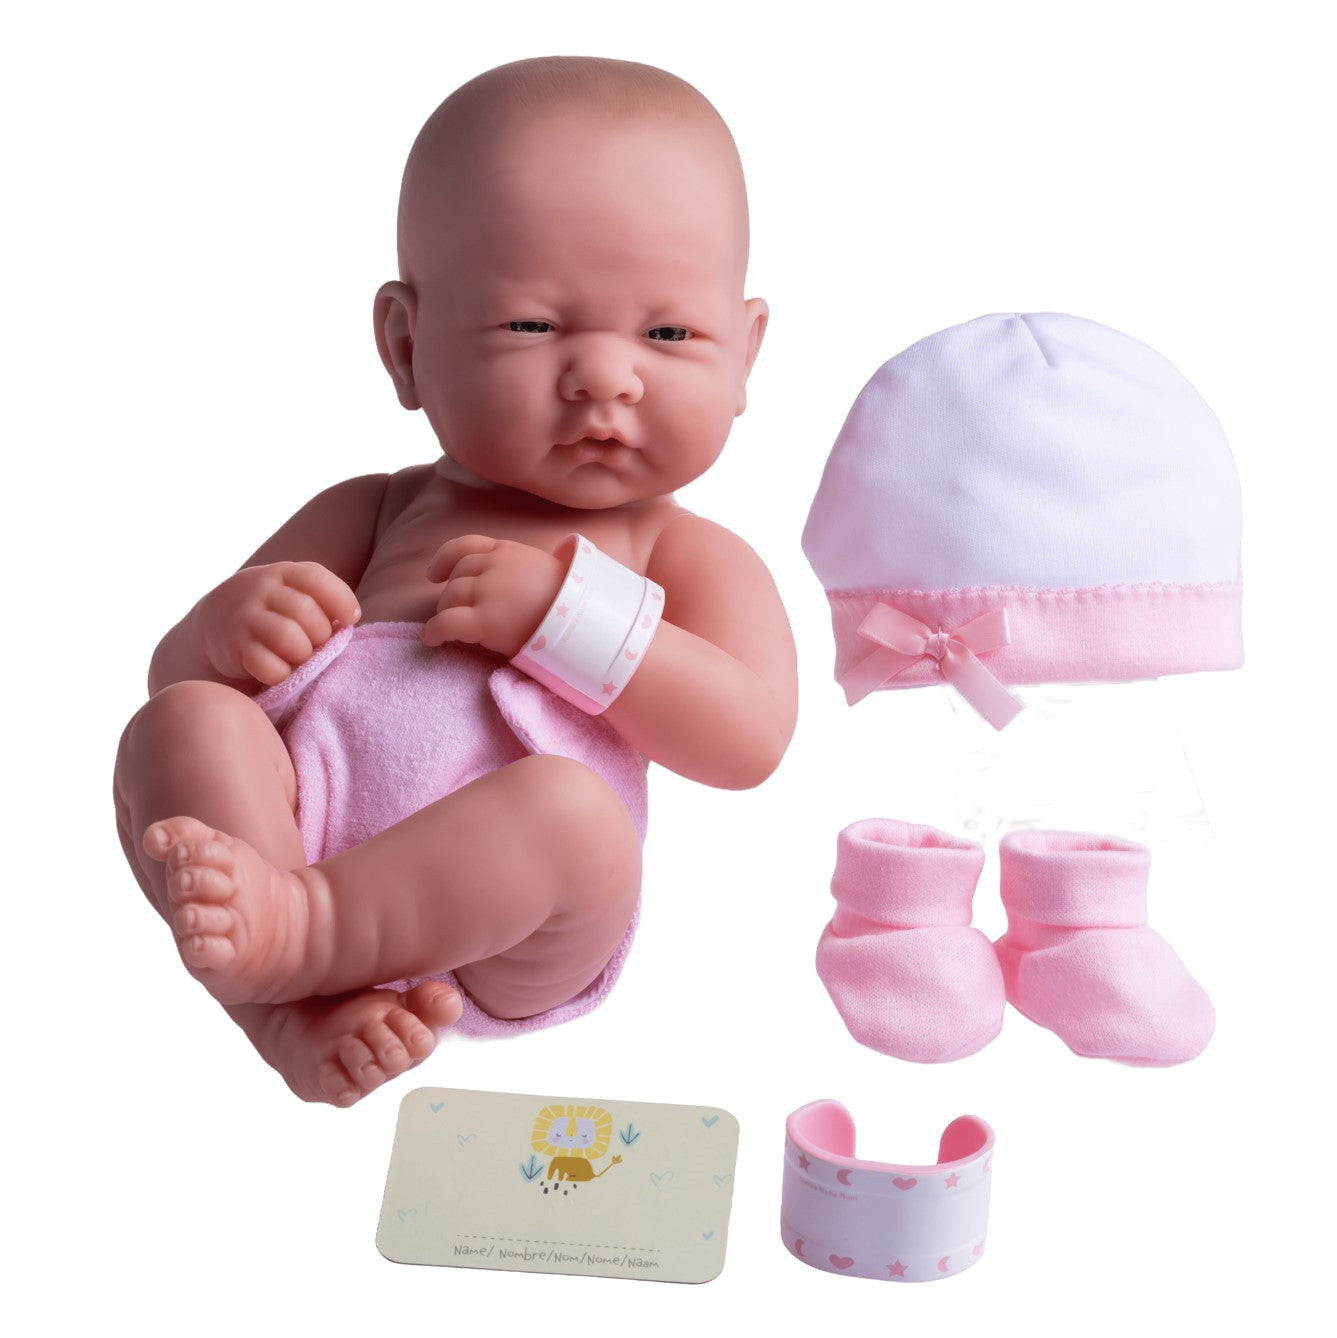 Jc Toys La Newborn 14 Girl Baby Doll 9pc Set - Pink Romper : Target